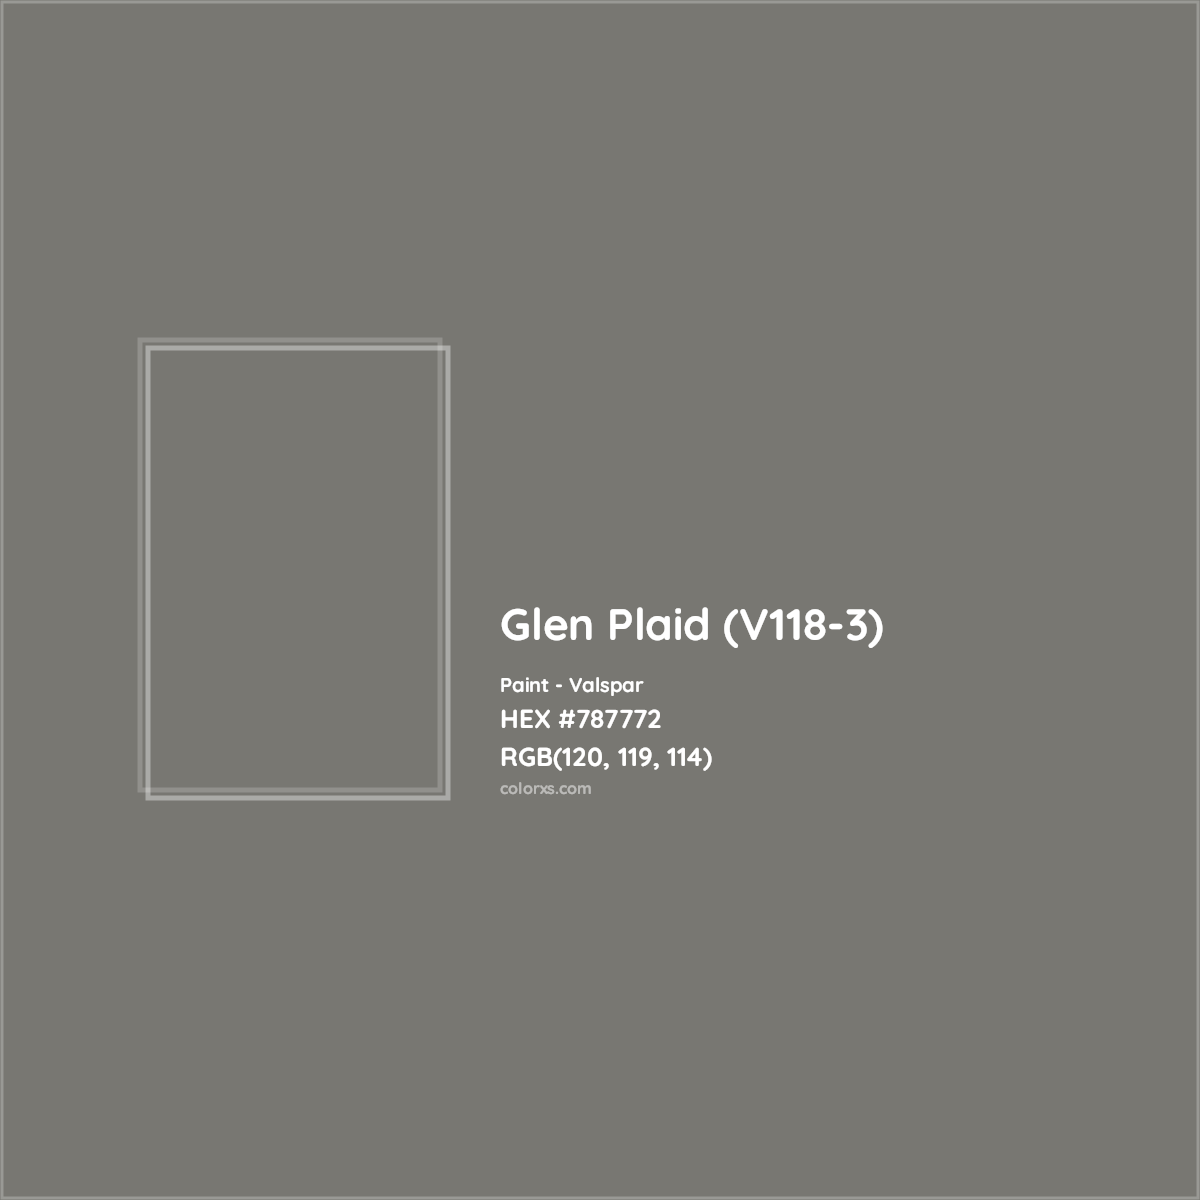 HEX #787772 Glen Plaid (V118-3) Paint Valspar - Color Code